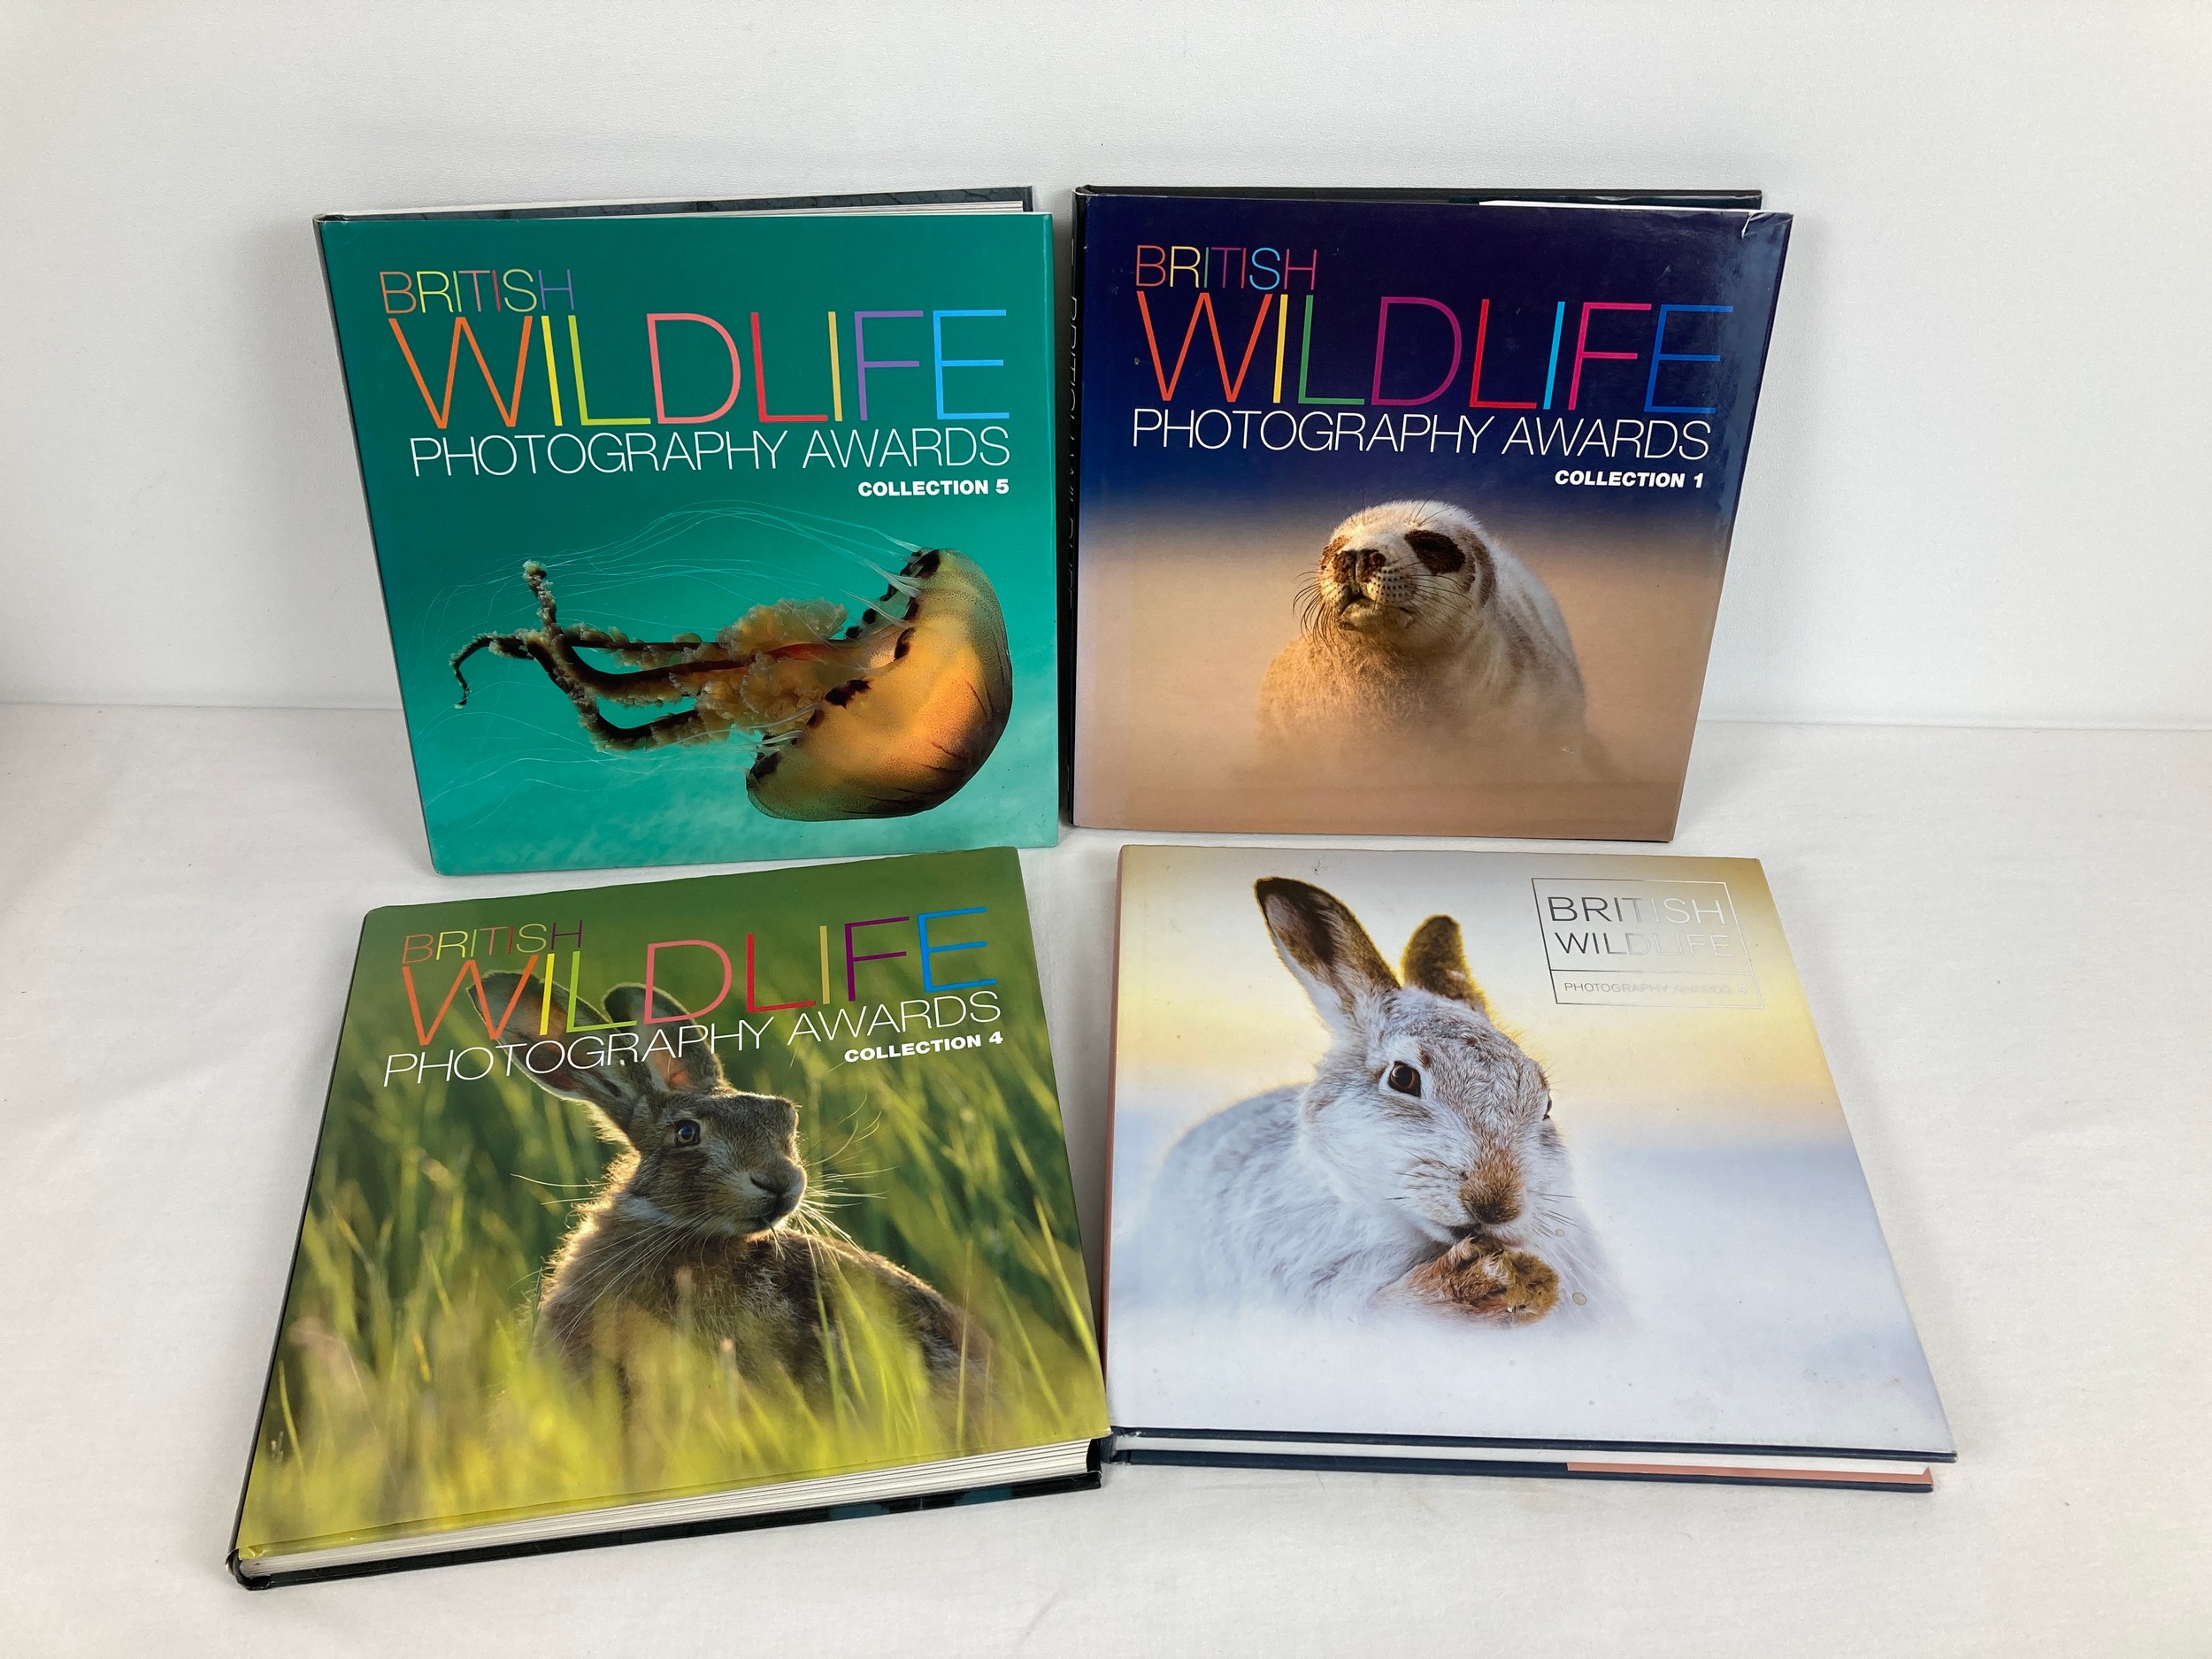 4 hardback British Wildlife Photography Awards books. Collection 1, 4, 5 and 9.